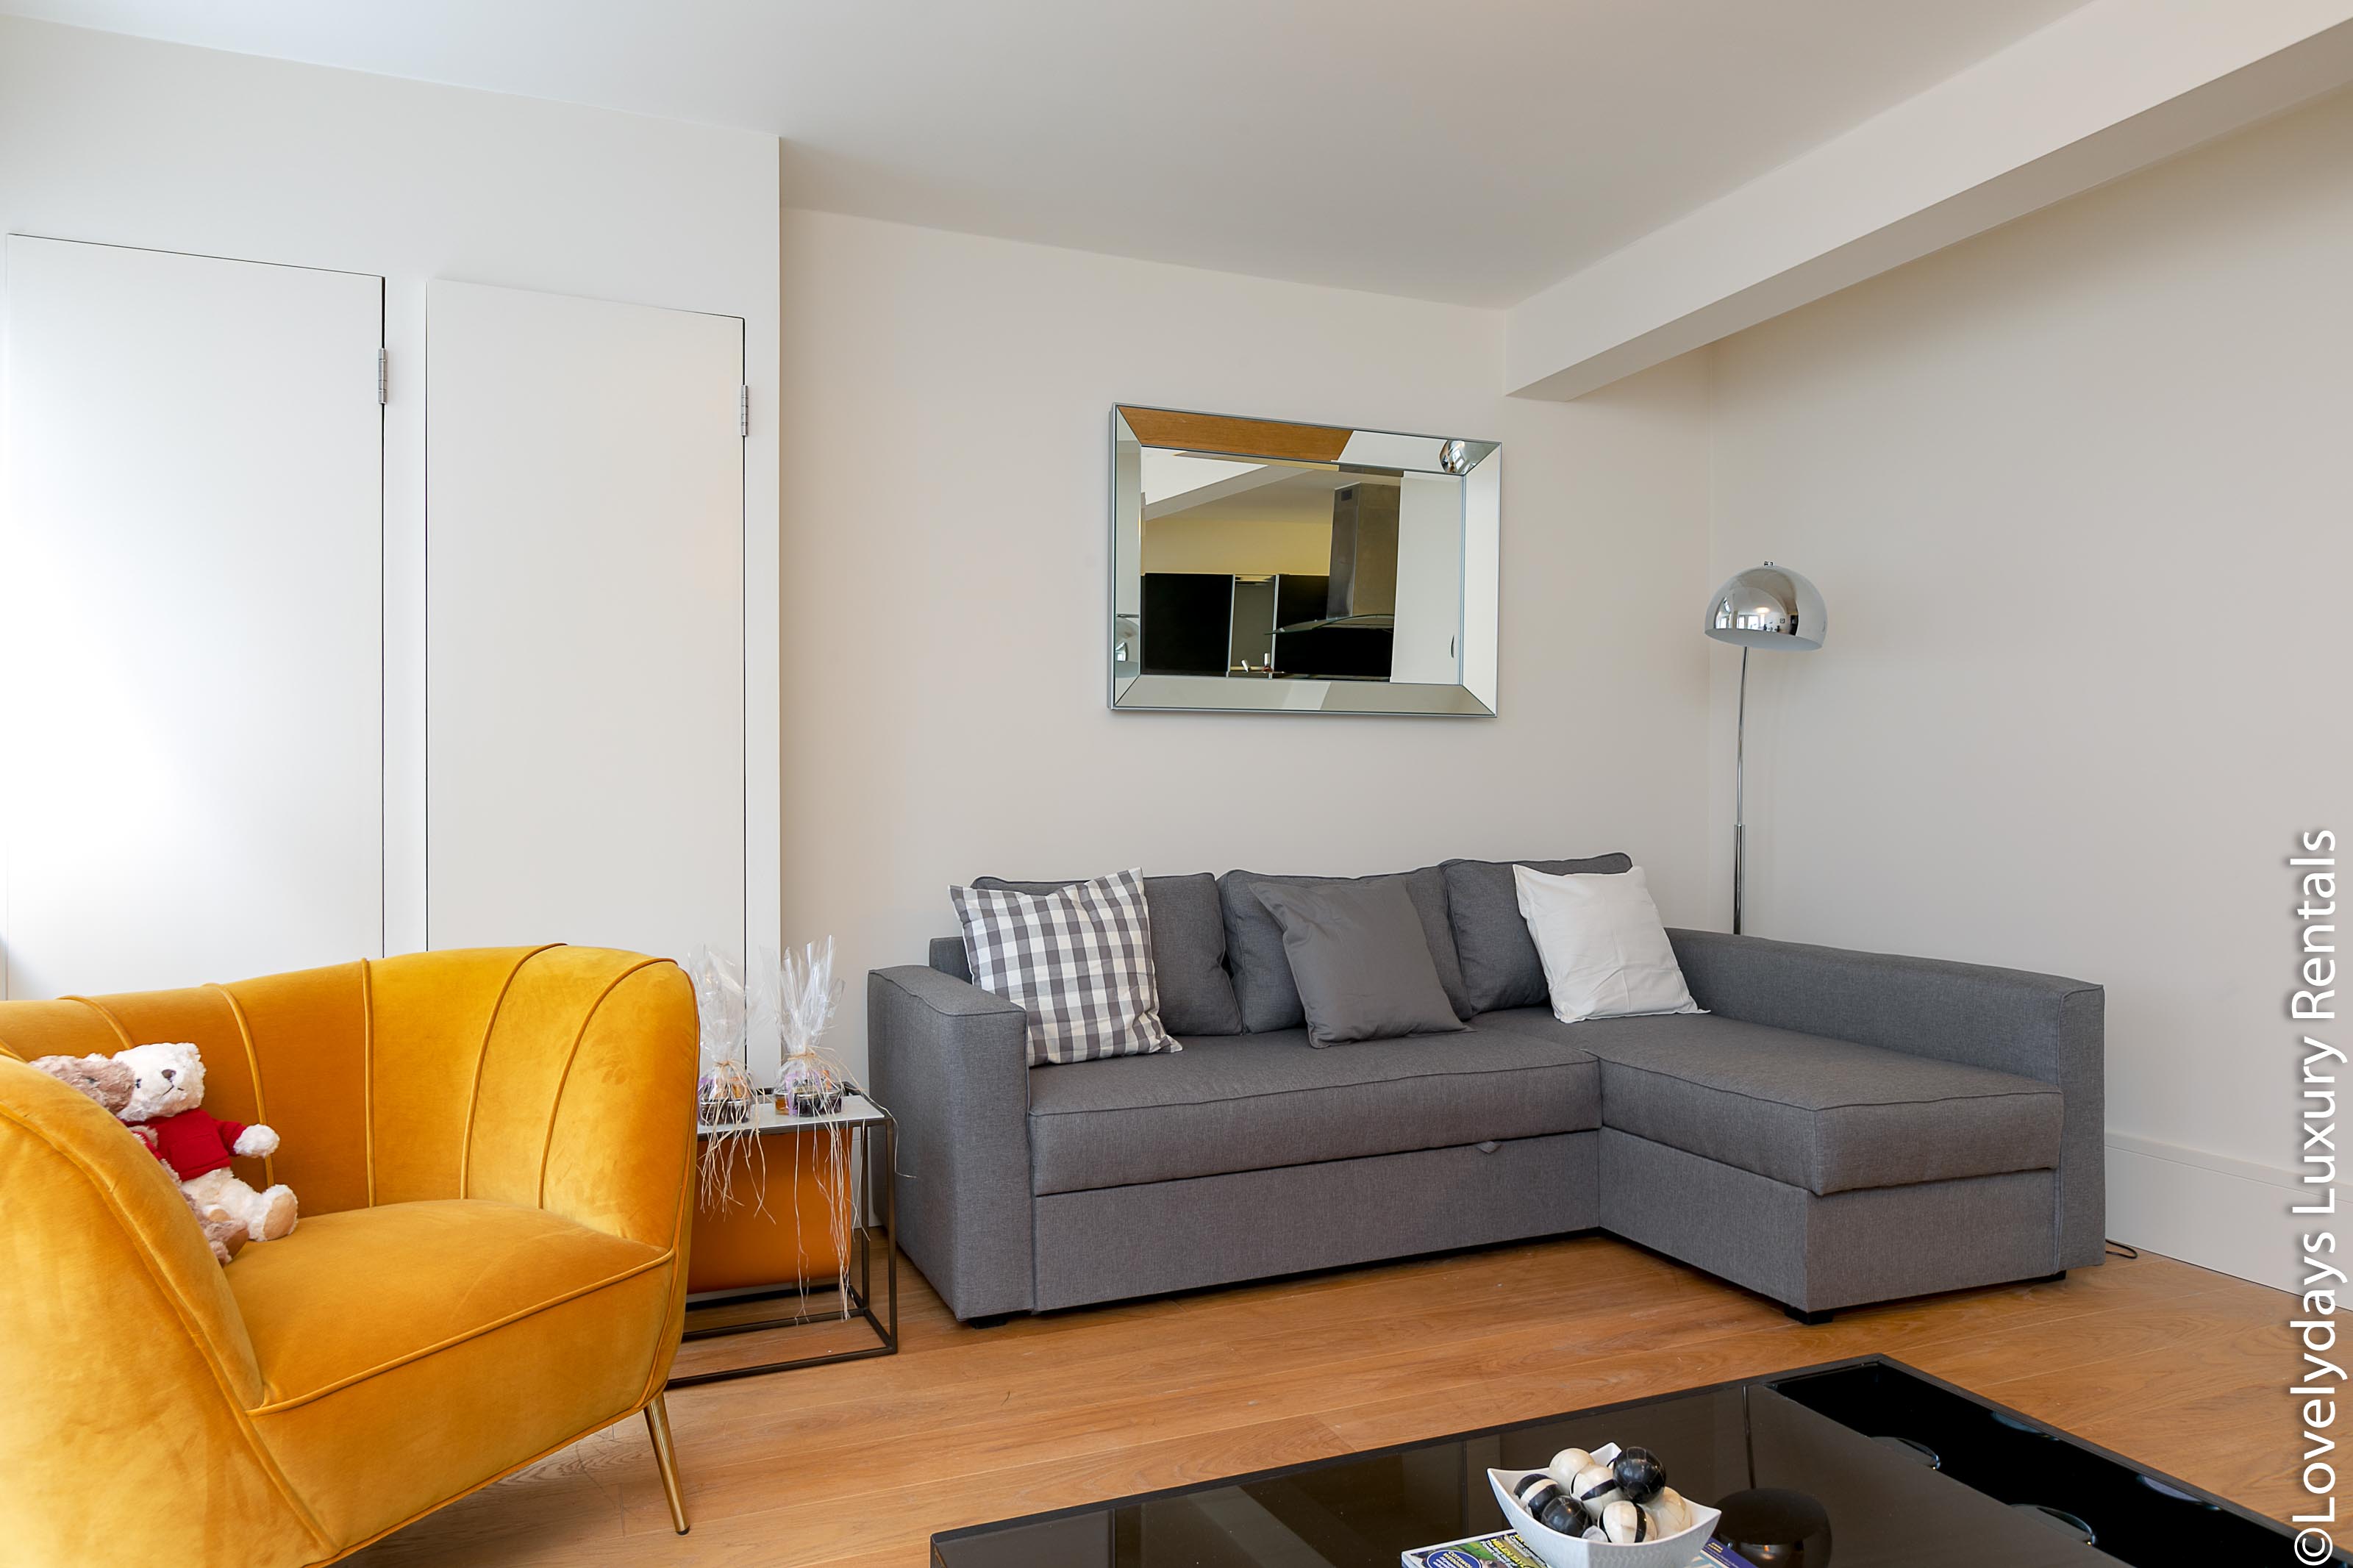 Lovelydays luxury service apartment rental - London - Soho - D'Arblay Street - Lovelysuite - 1 bedrooms - 1 bathrooms - Double living room - london serviced apartment - 92bfc9cec48b - Lovelydays